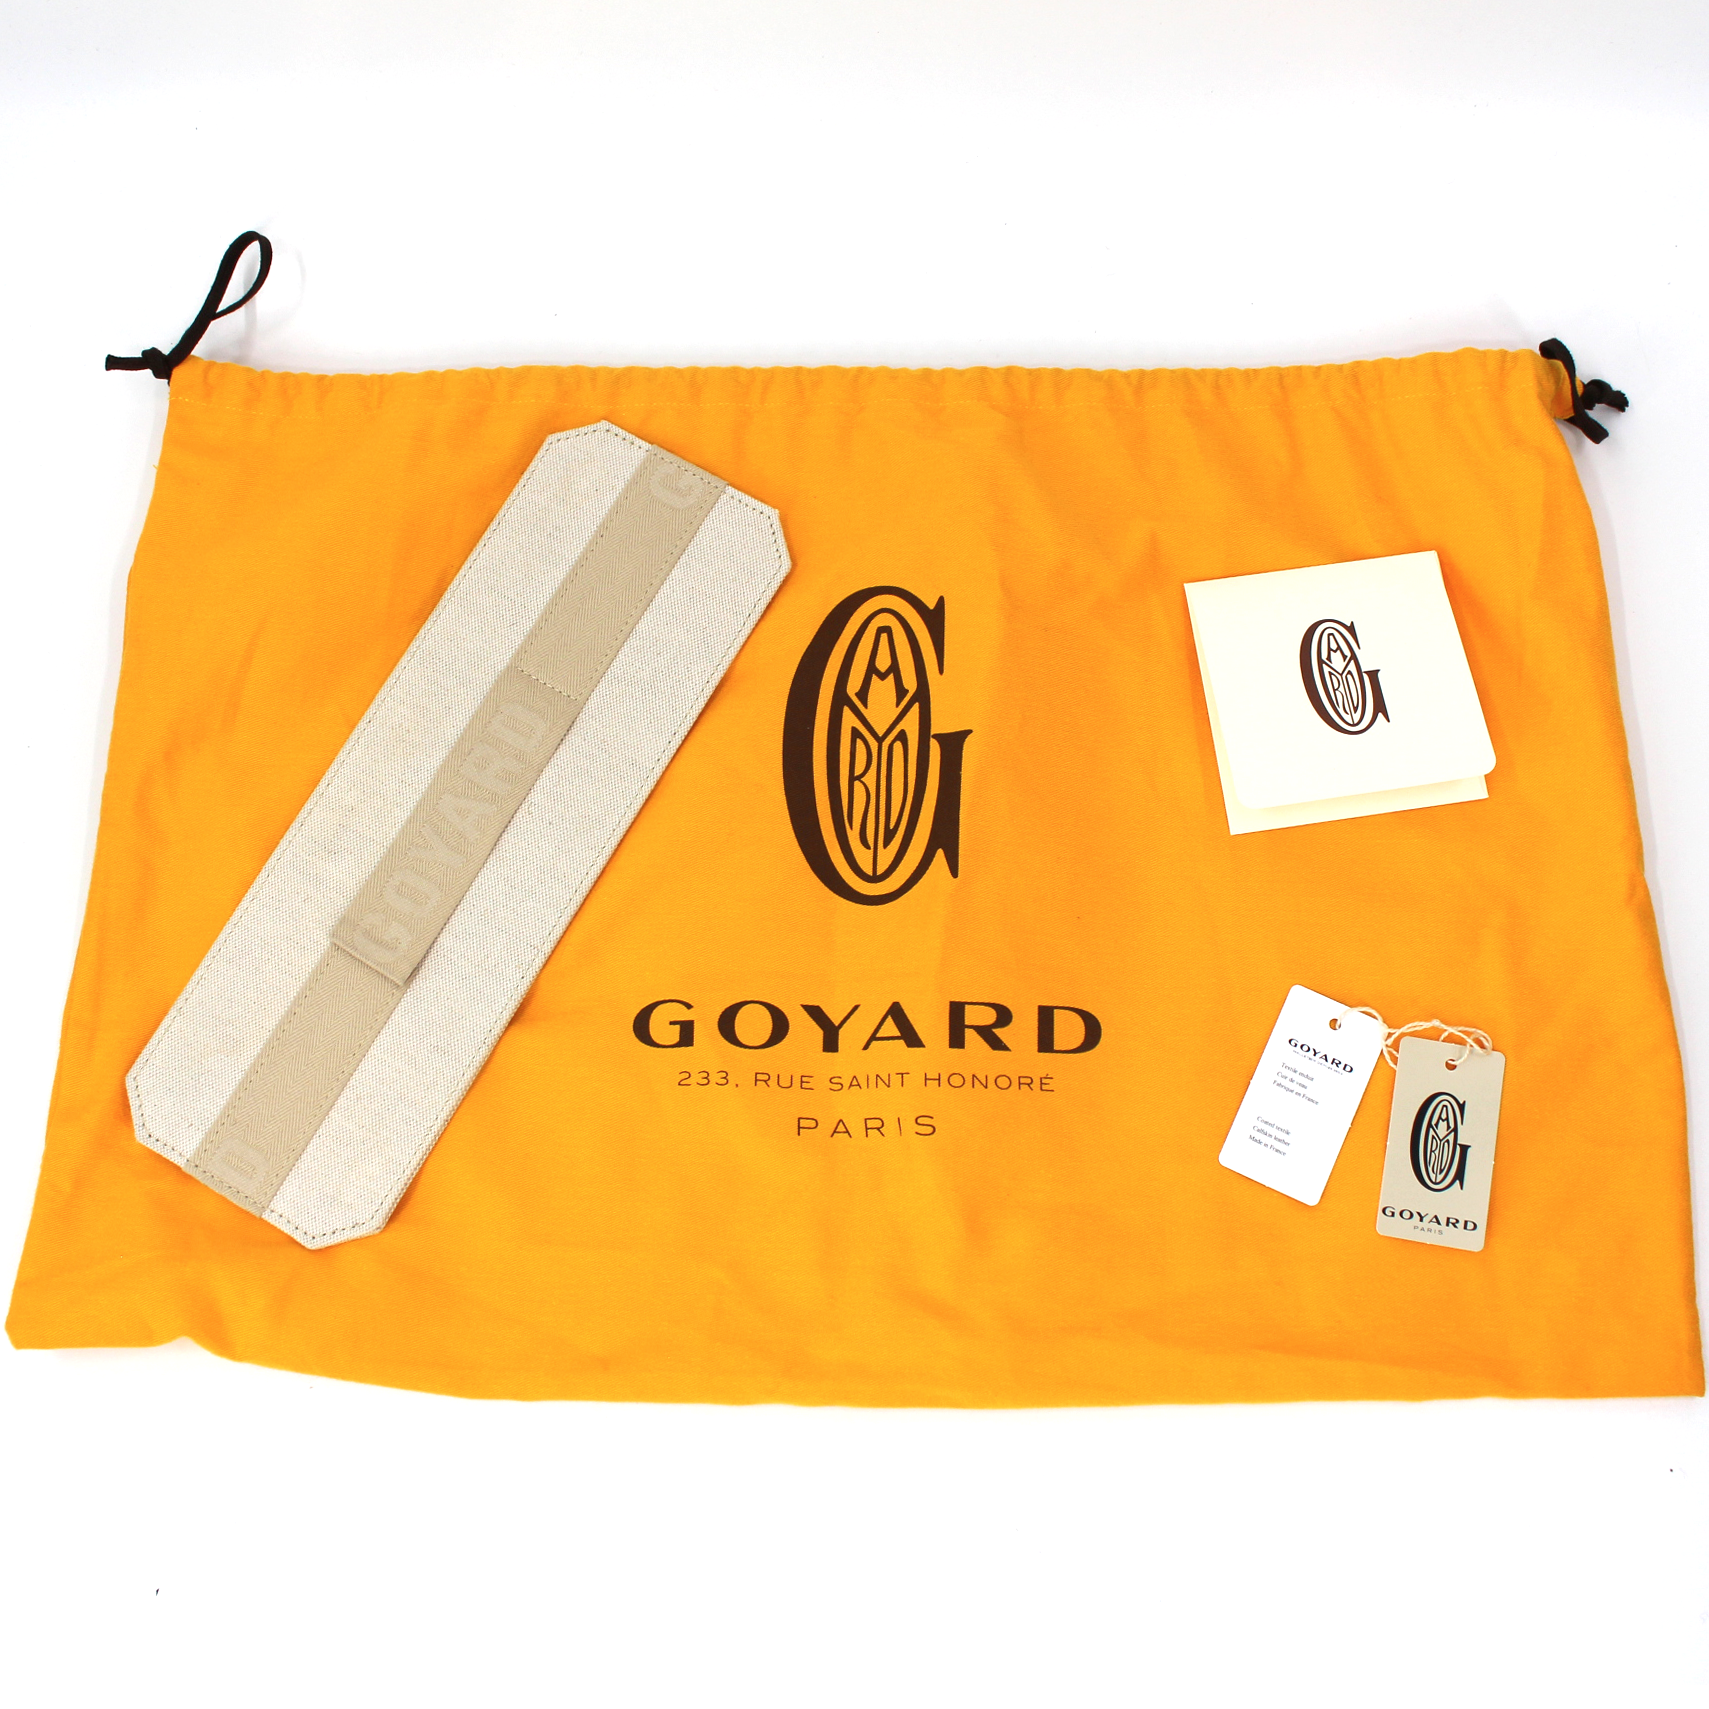 Goyard Rouette Soft PM Grey White Gayardine Leather Tote – The